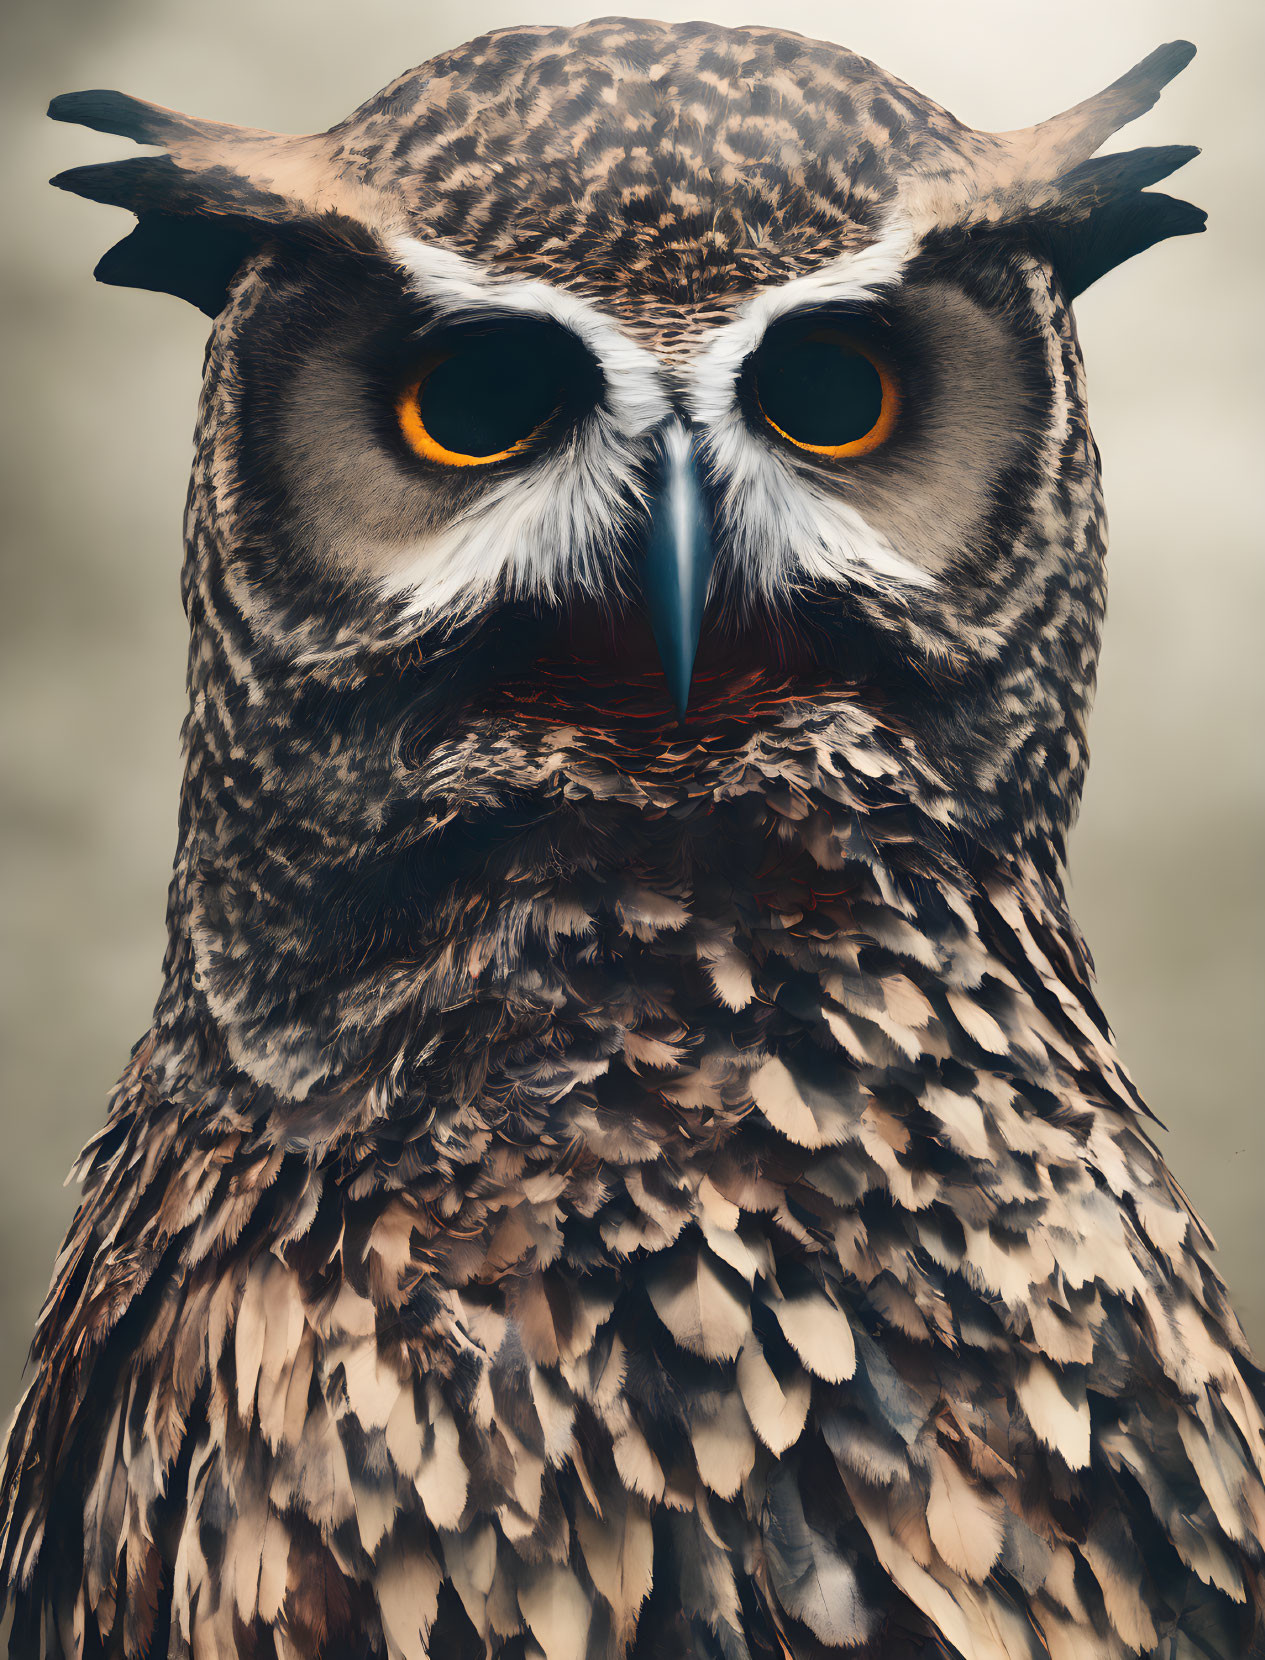 Creepy owl